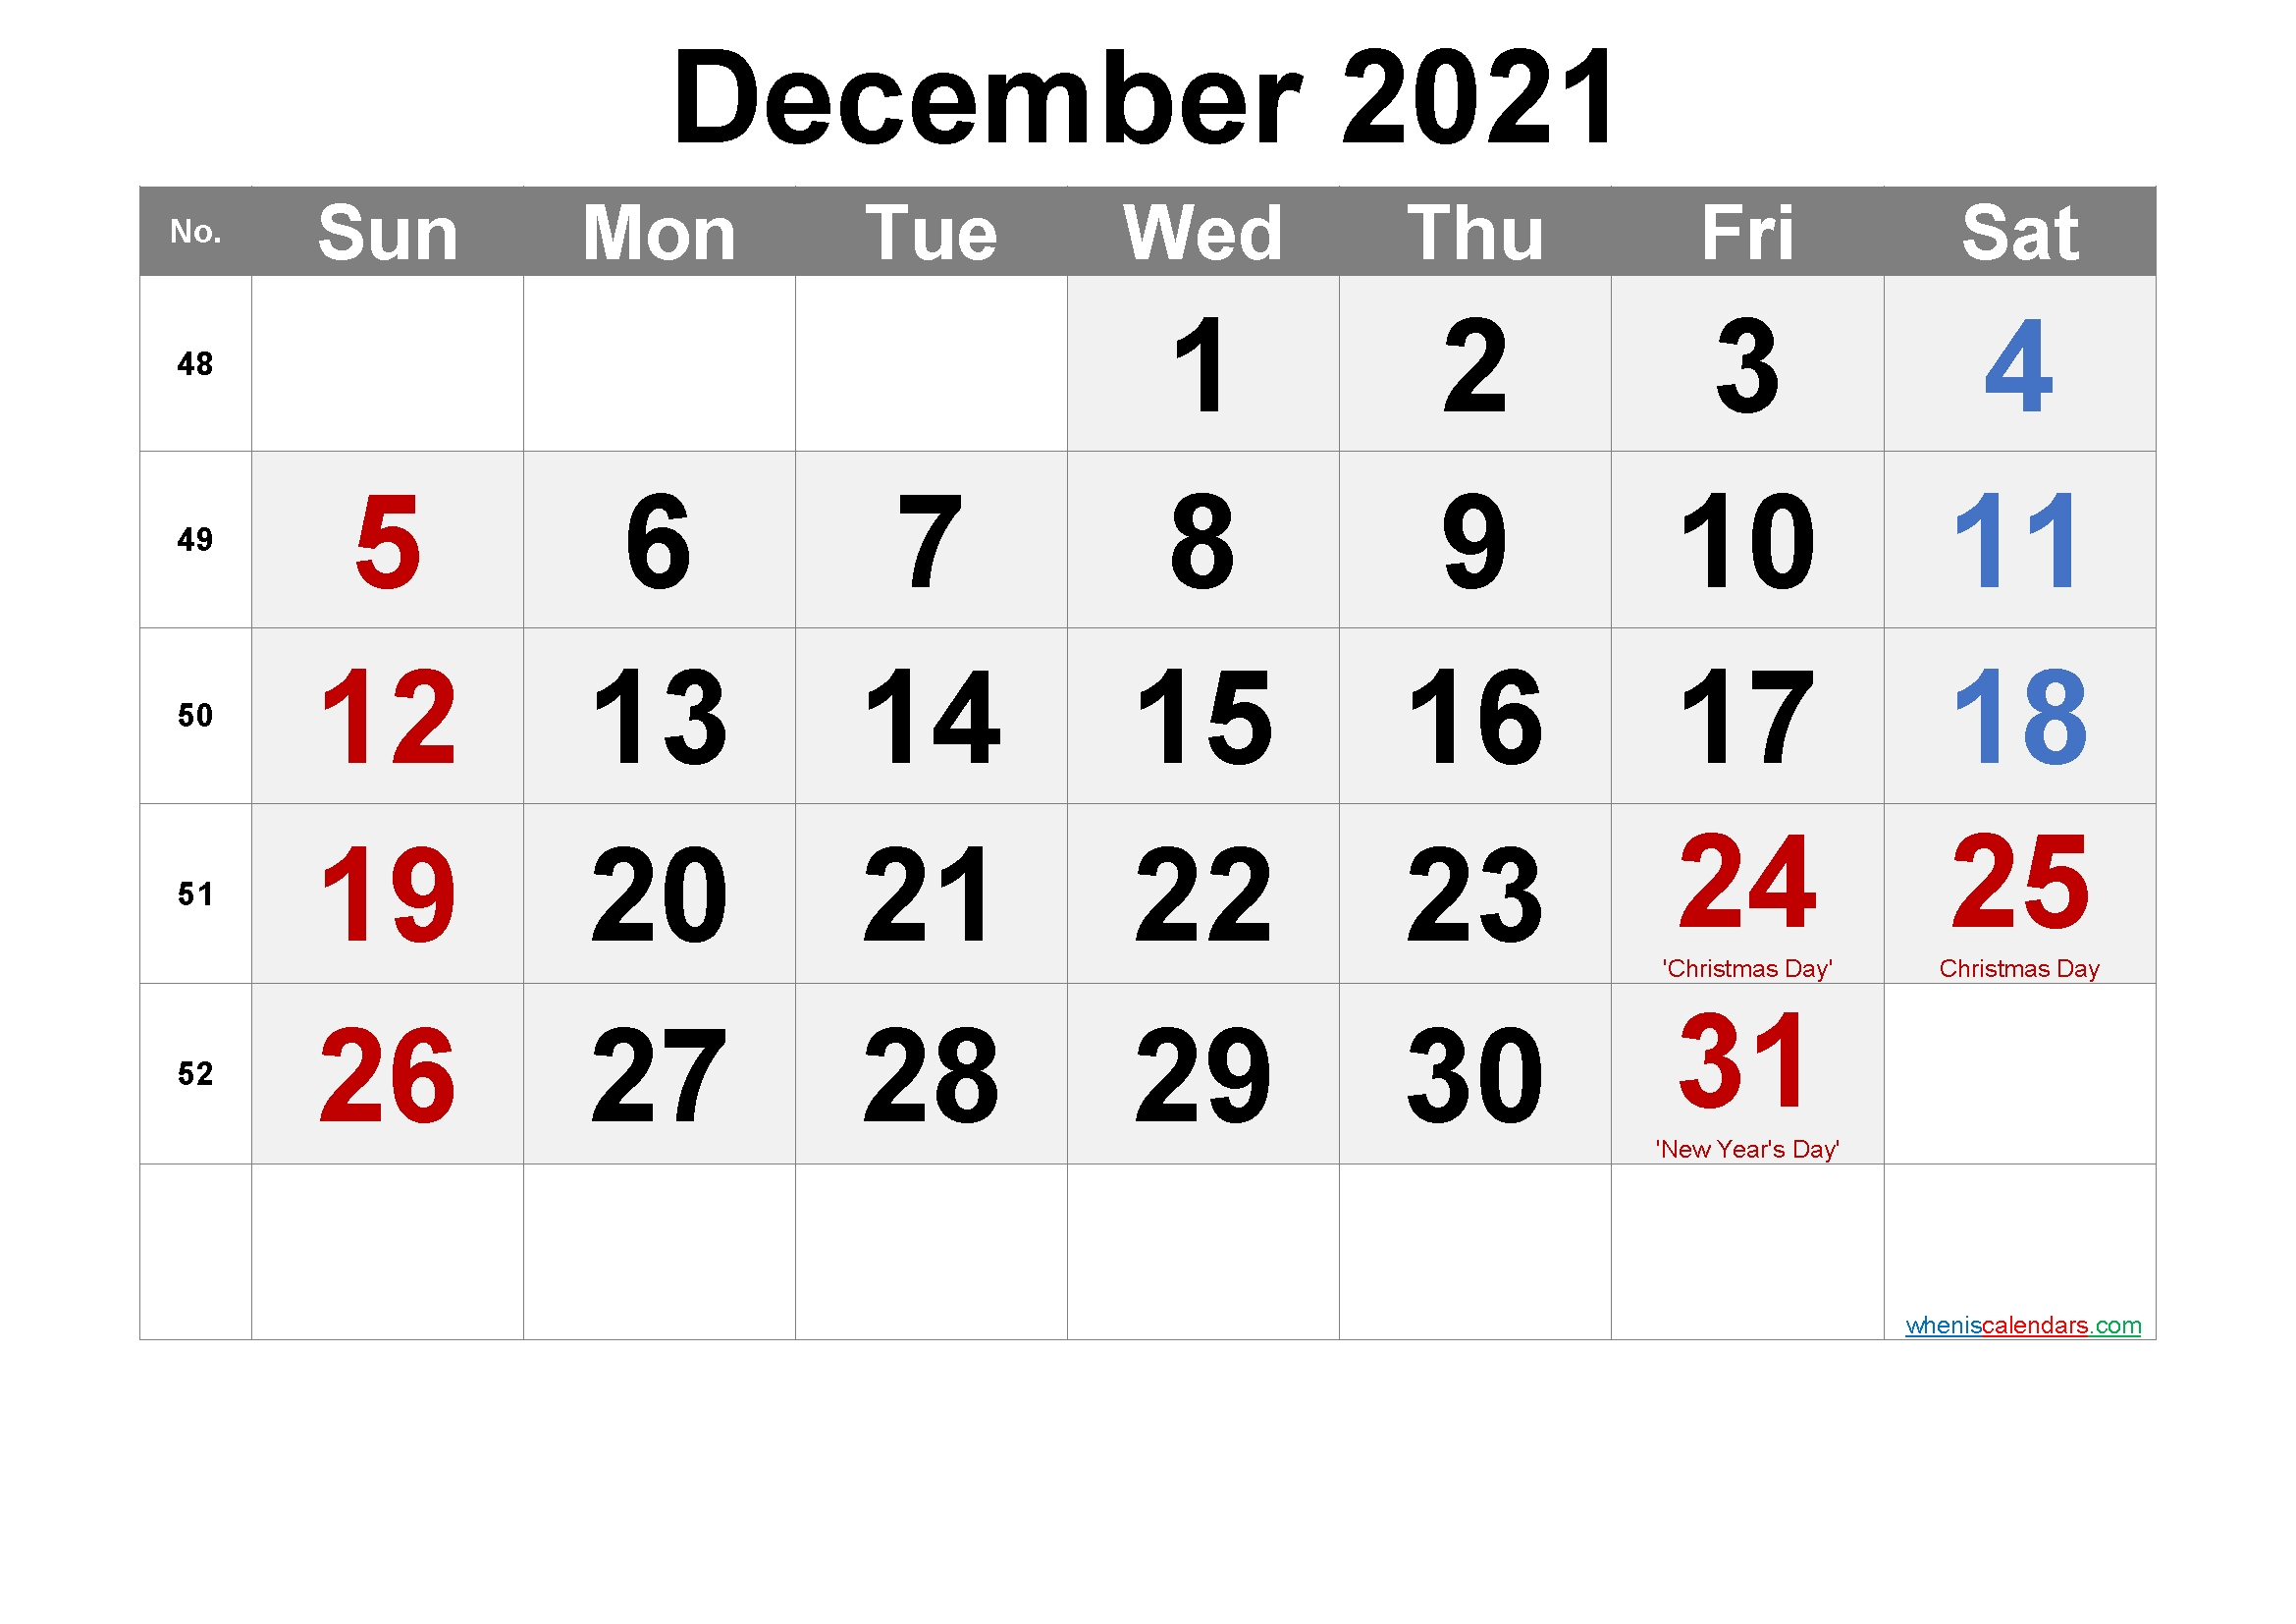 Free December 2021 Calendar Printable - Free Printable 2020 Monthly Calendar With Holidays December 2021 Calendar With Holidays Printable